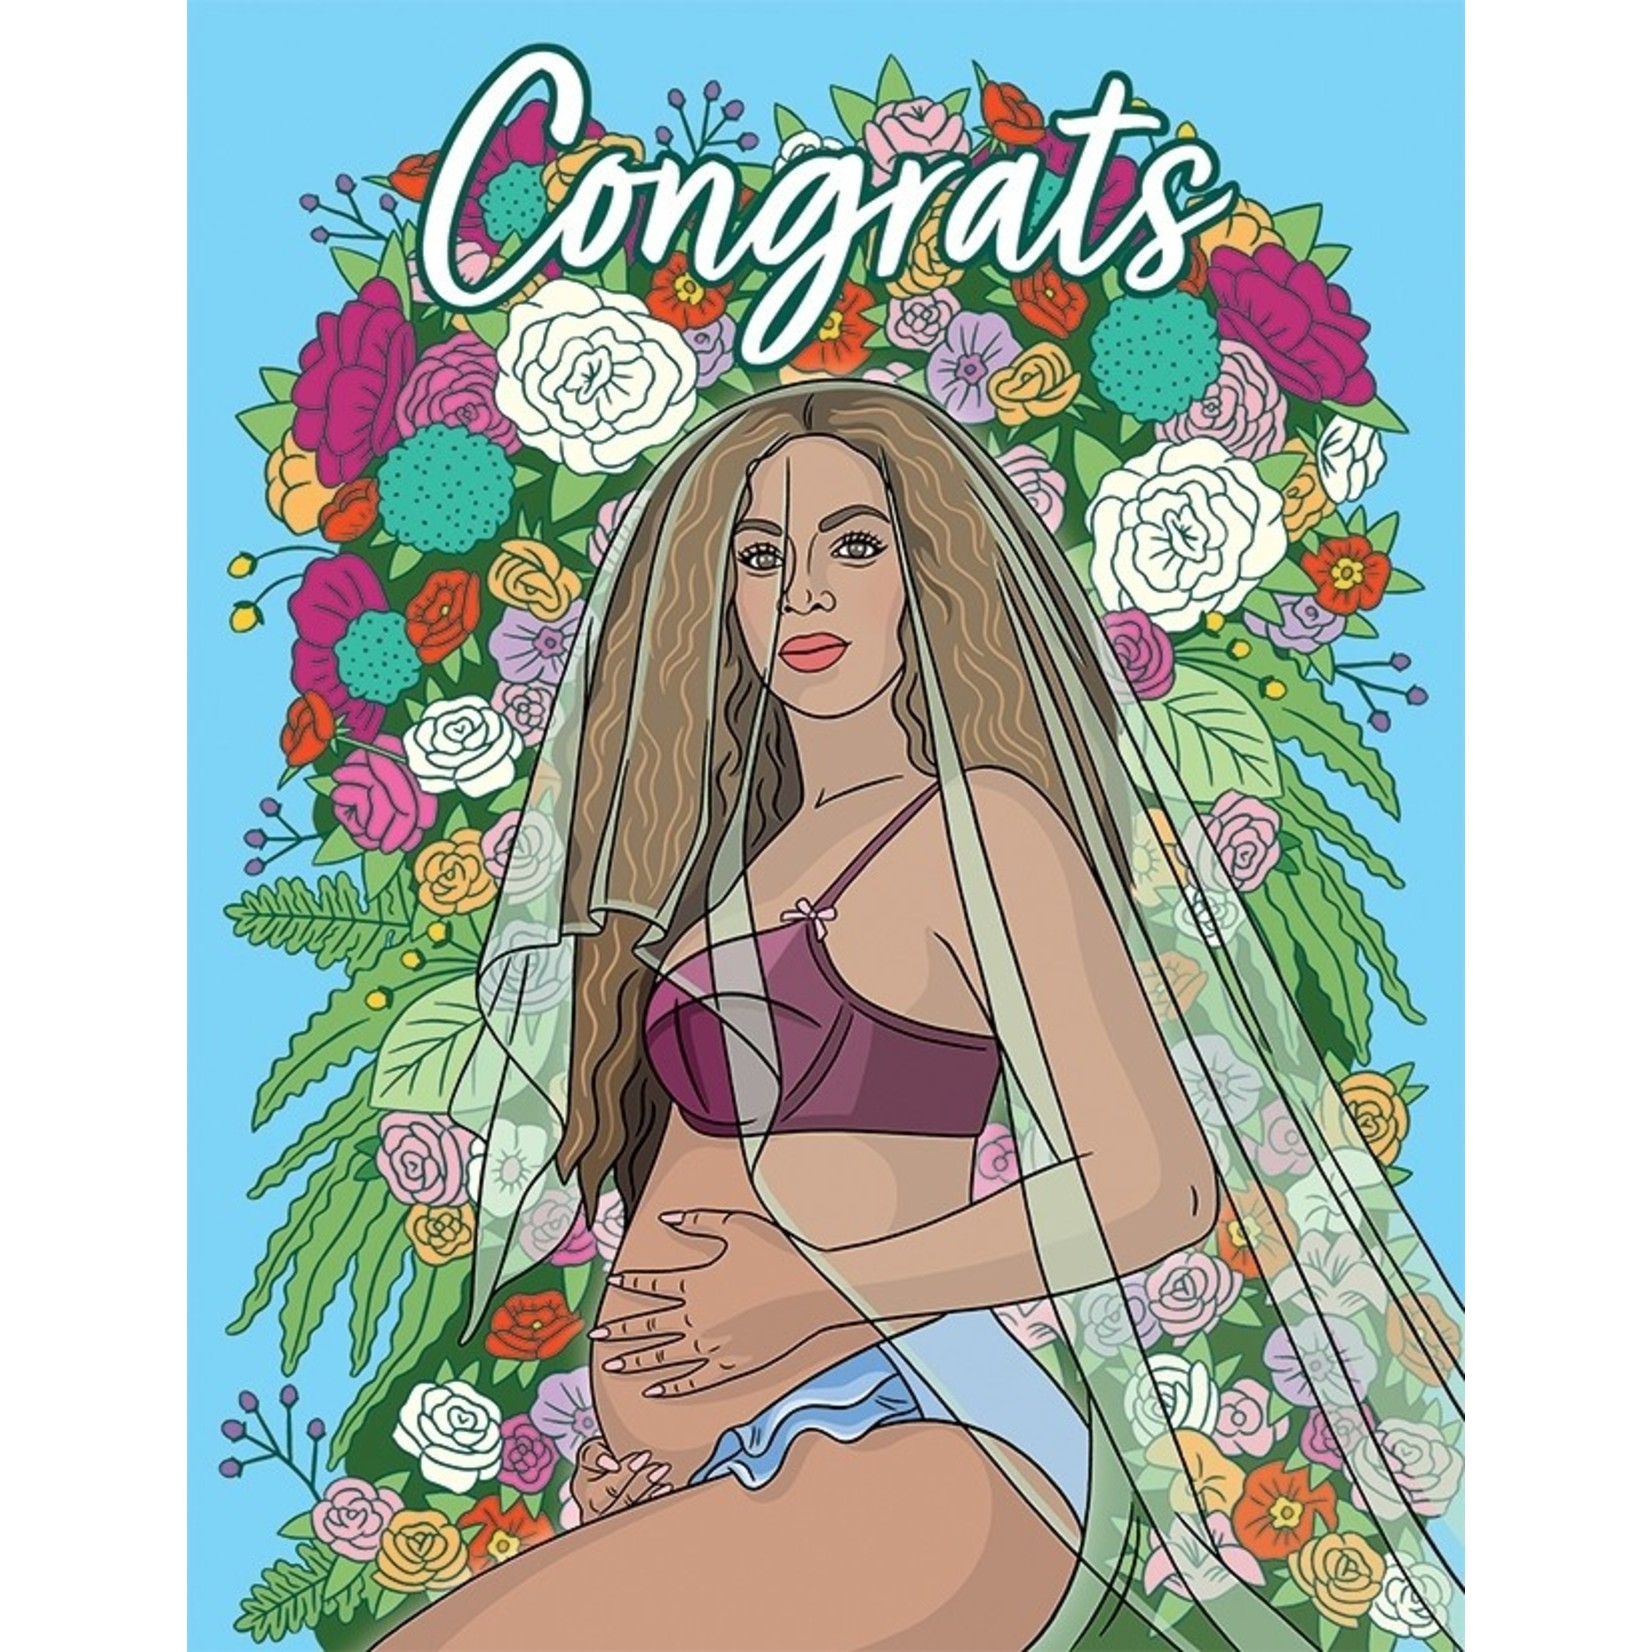 Baby Card: Congrats Beyonce